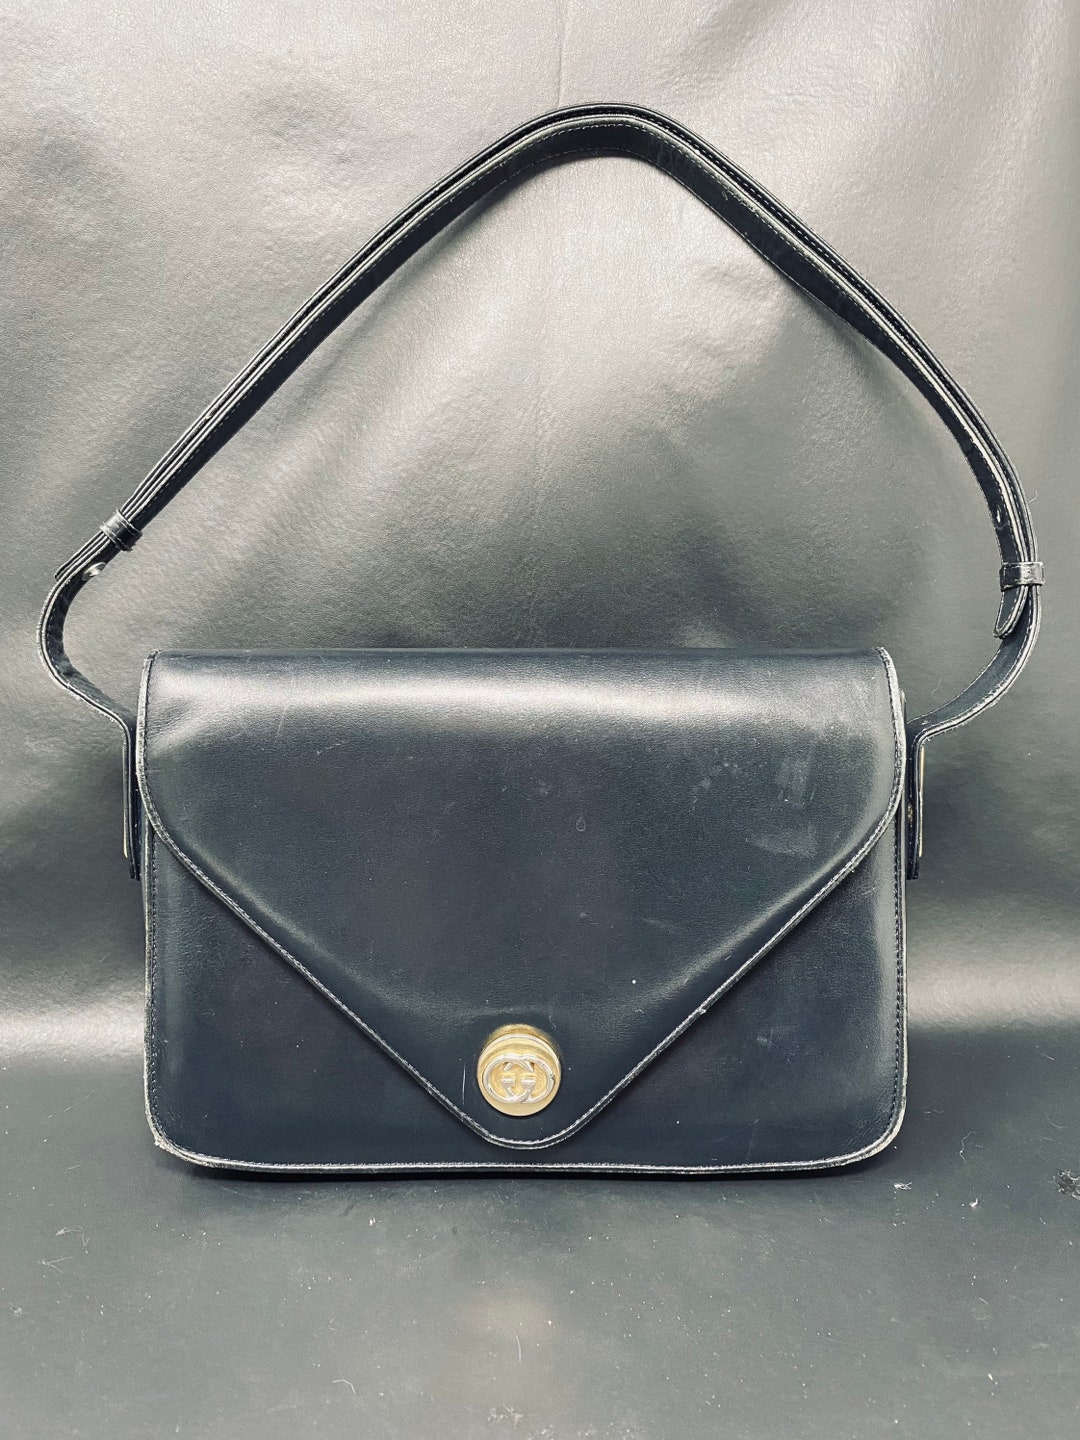 Authentic Gucci Navy Blue Box Leather Shoulder Handbag Purse - Etsy